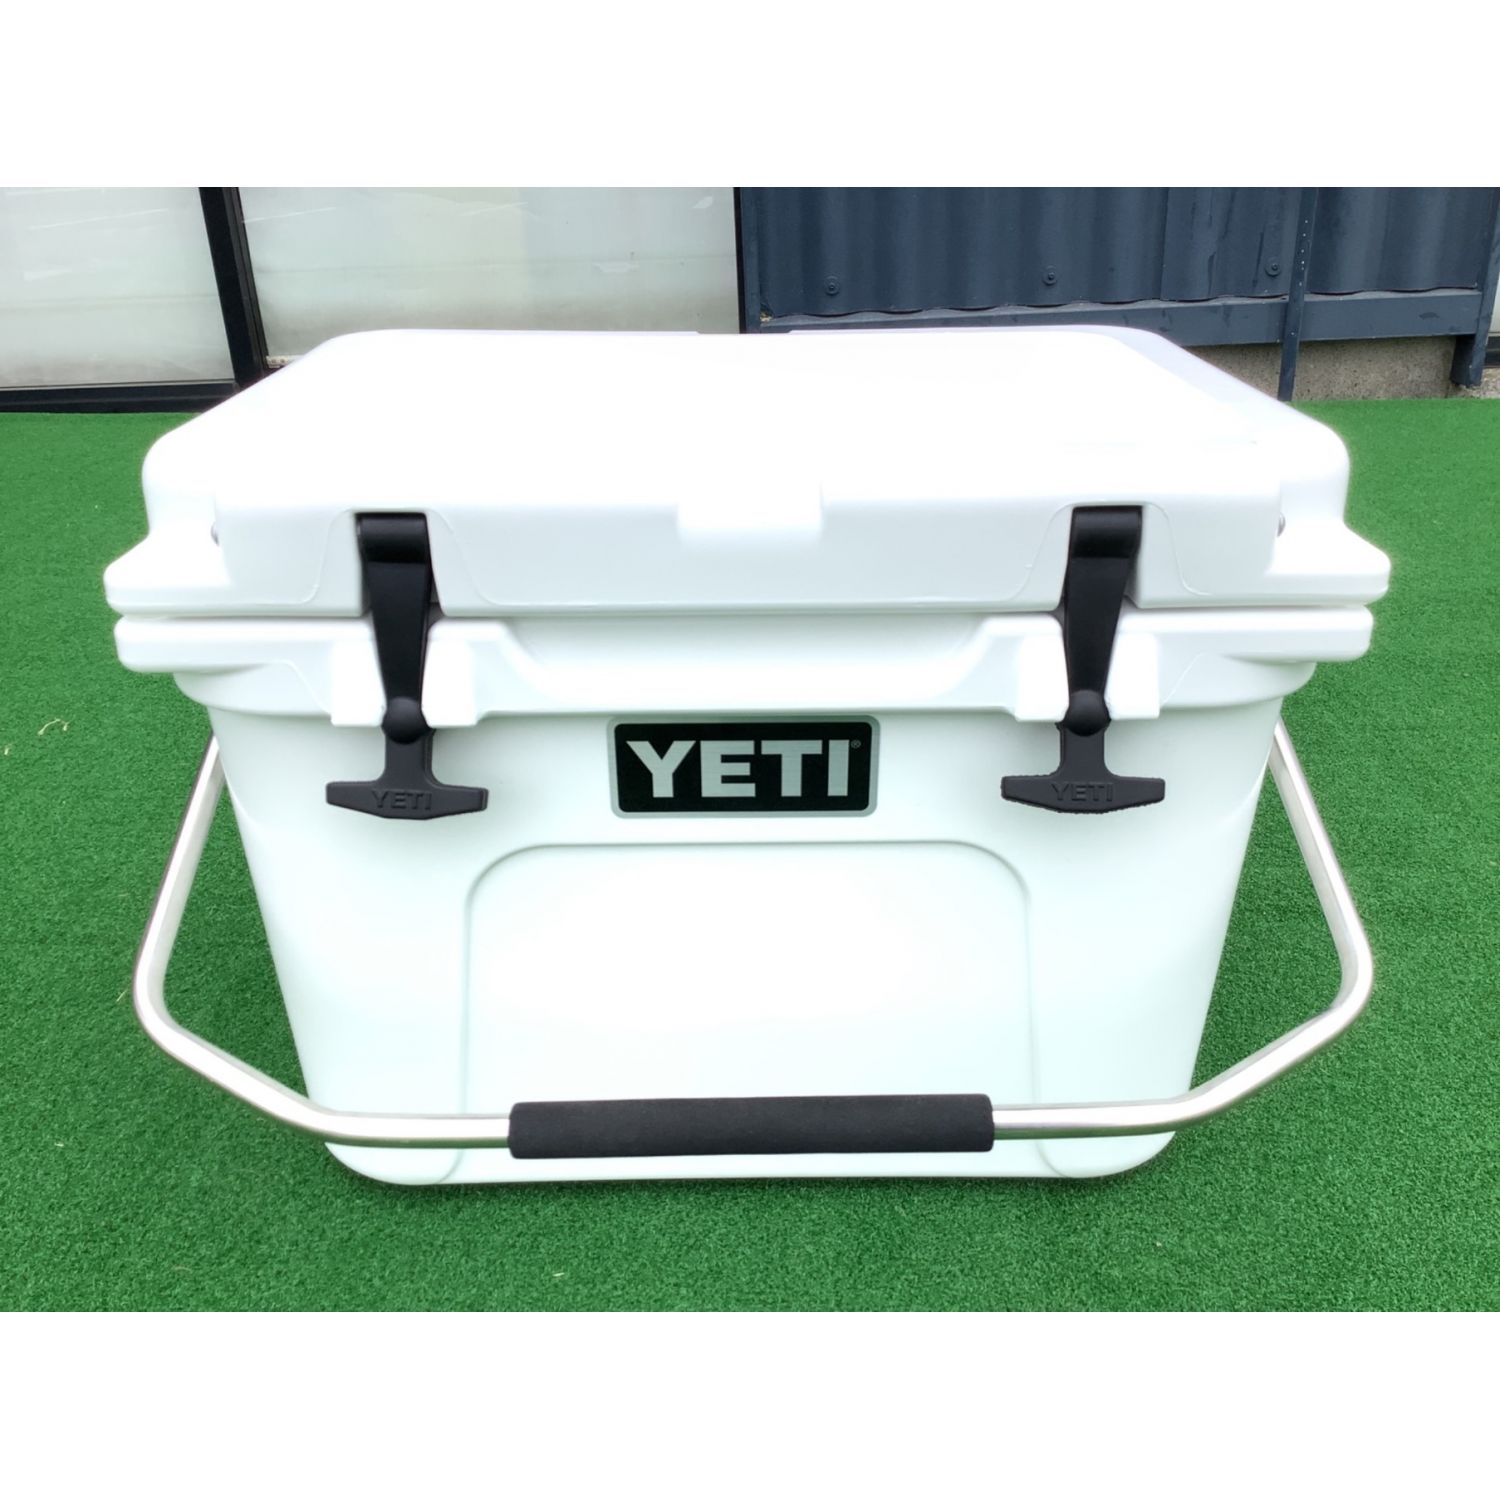 Yeti (イエティ) クーラーボックス 20QT(19.6L) ホワイト 廃盤品